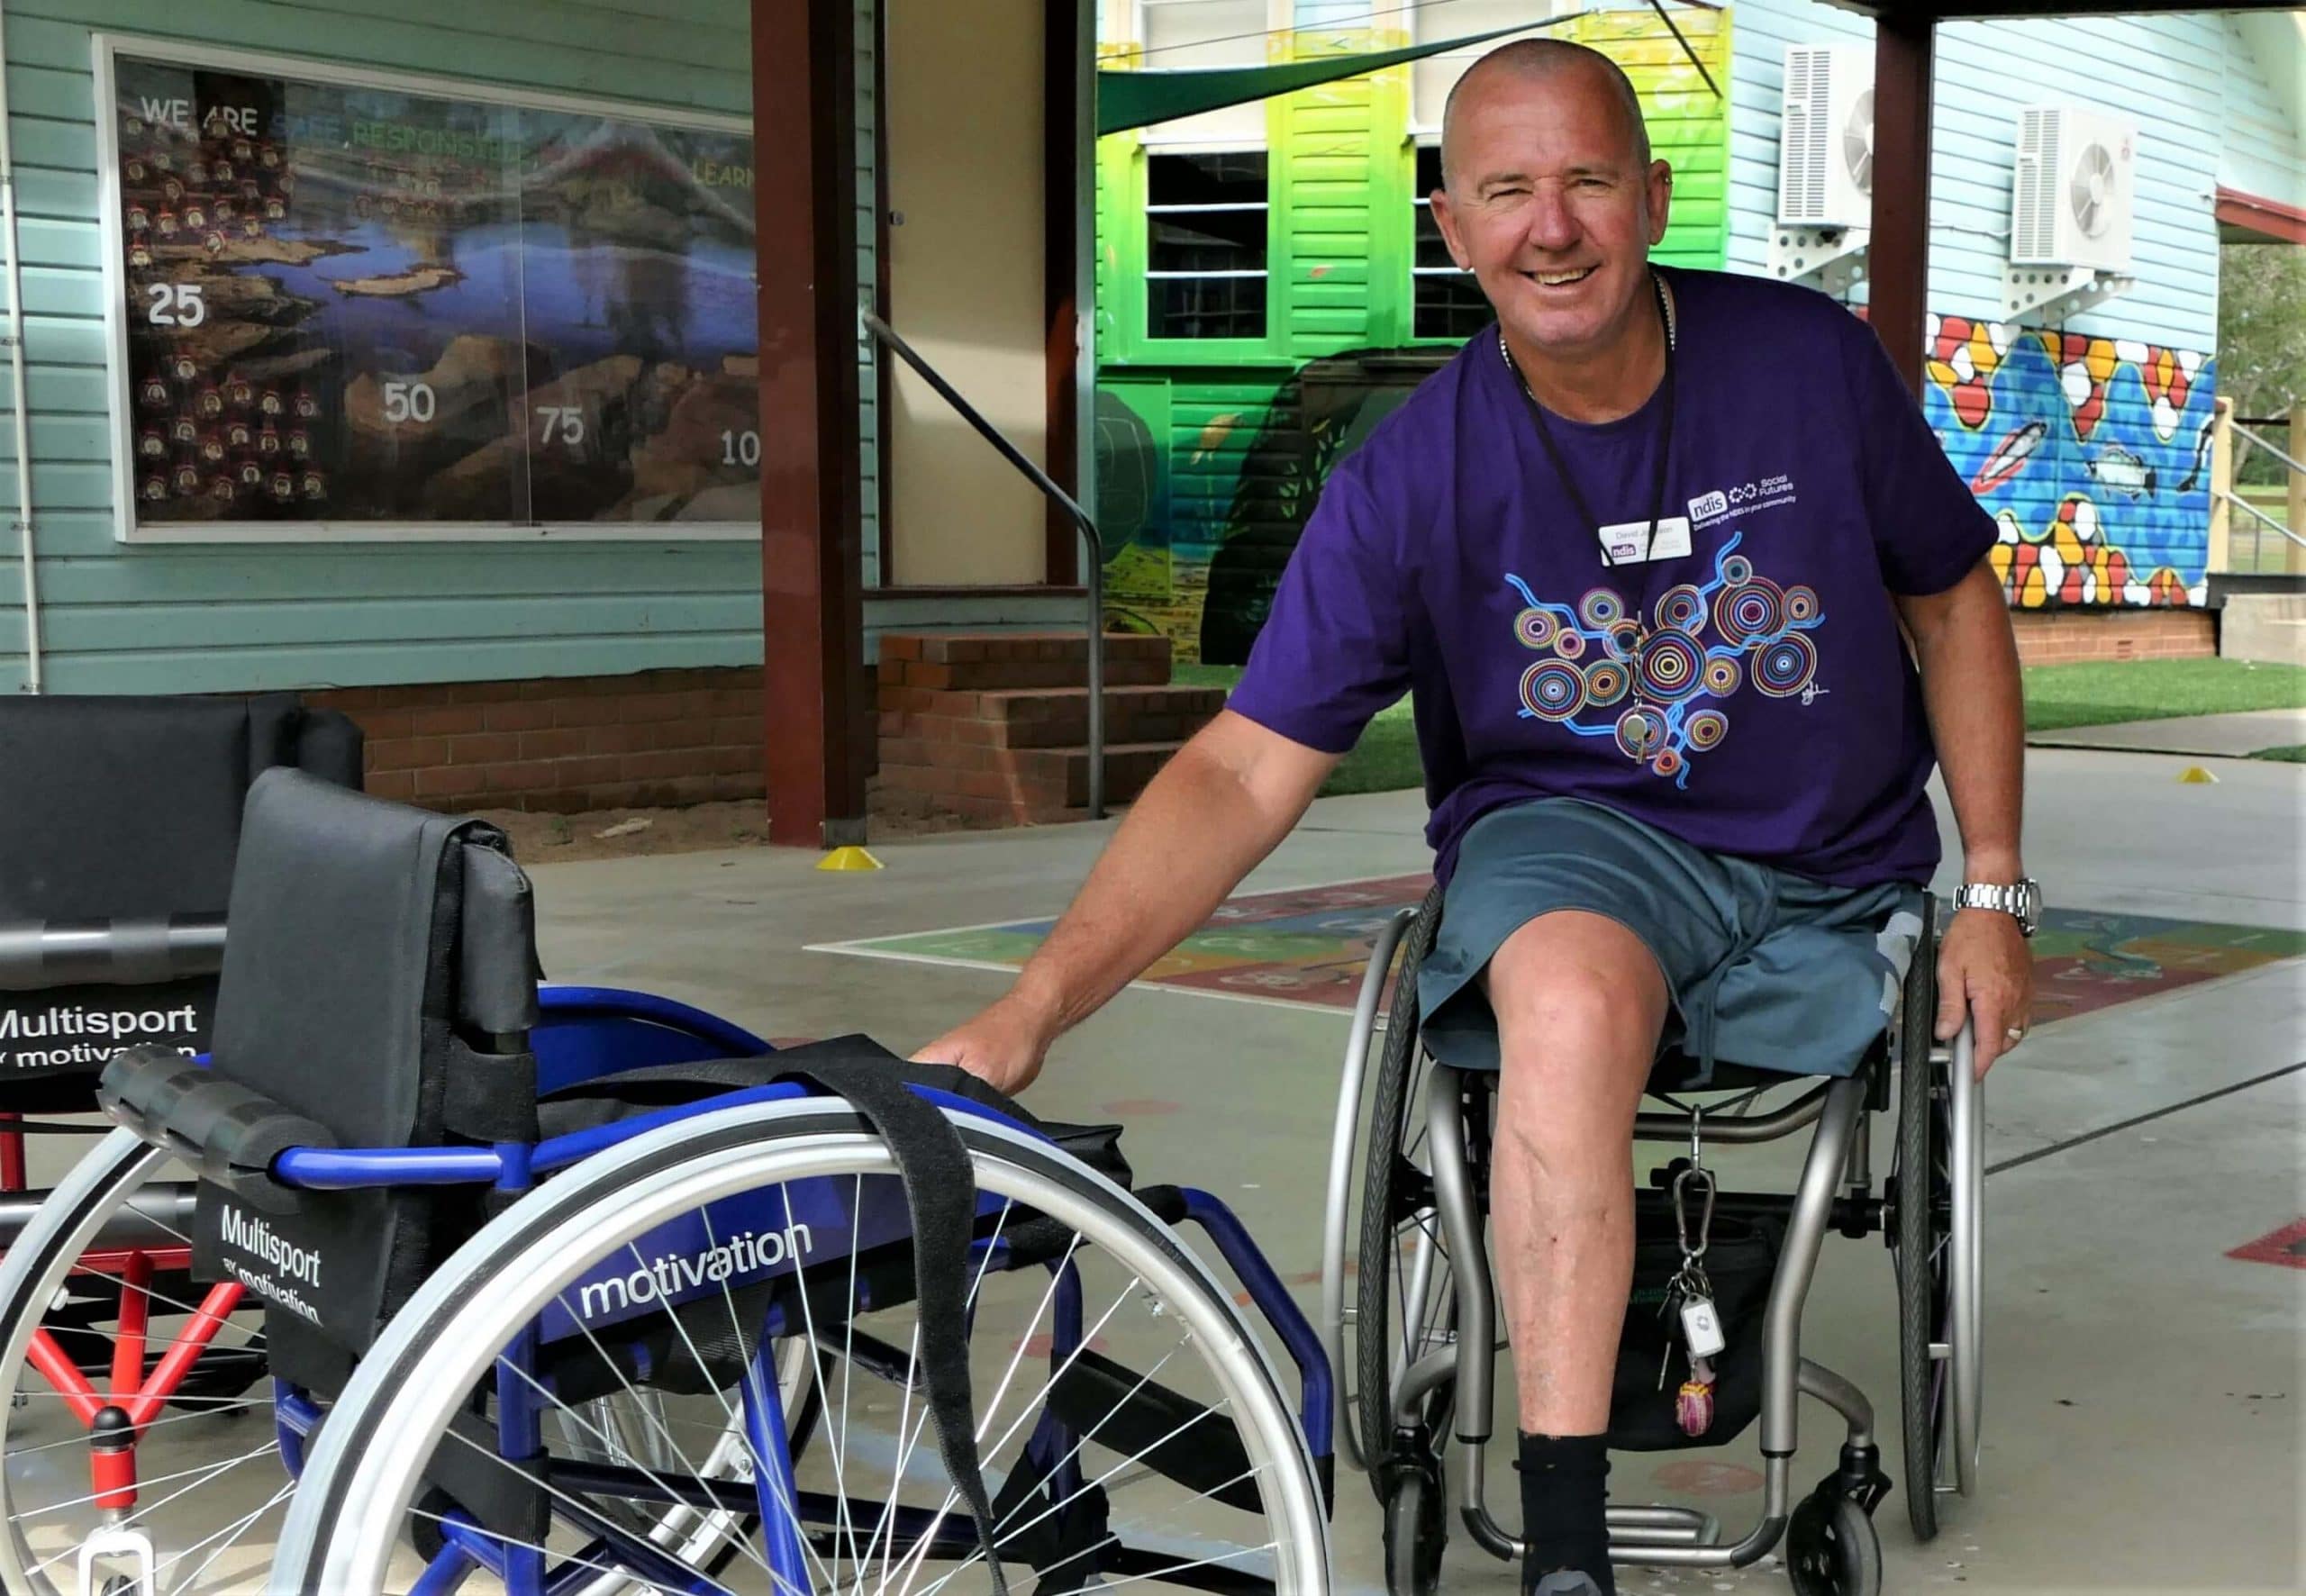 David Johnson sitting in his wheelchair smiling